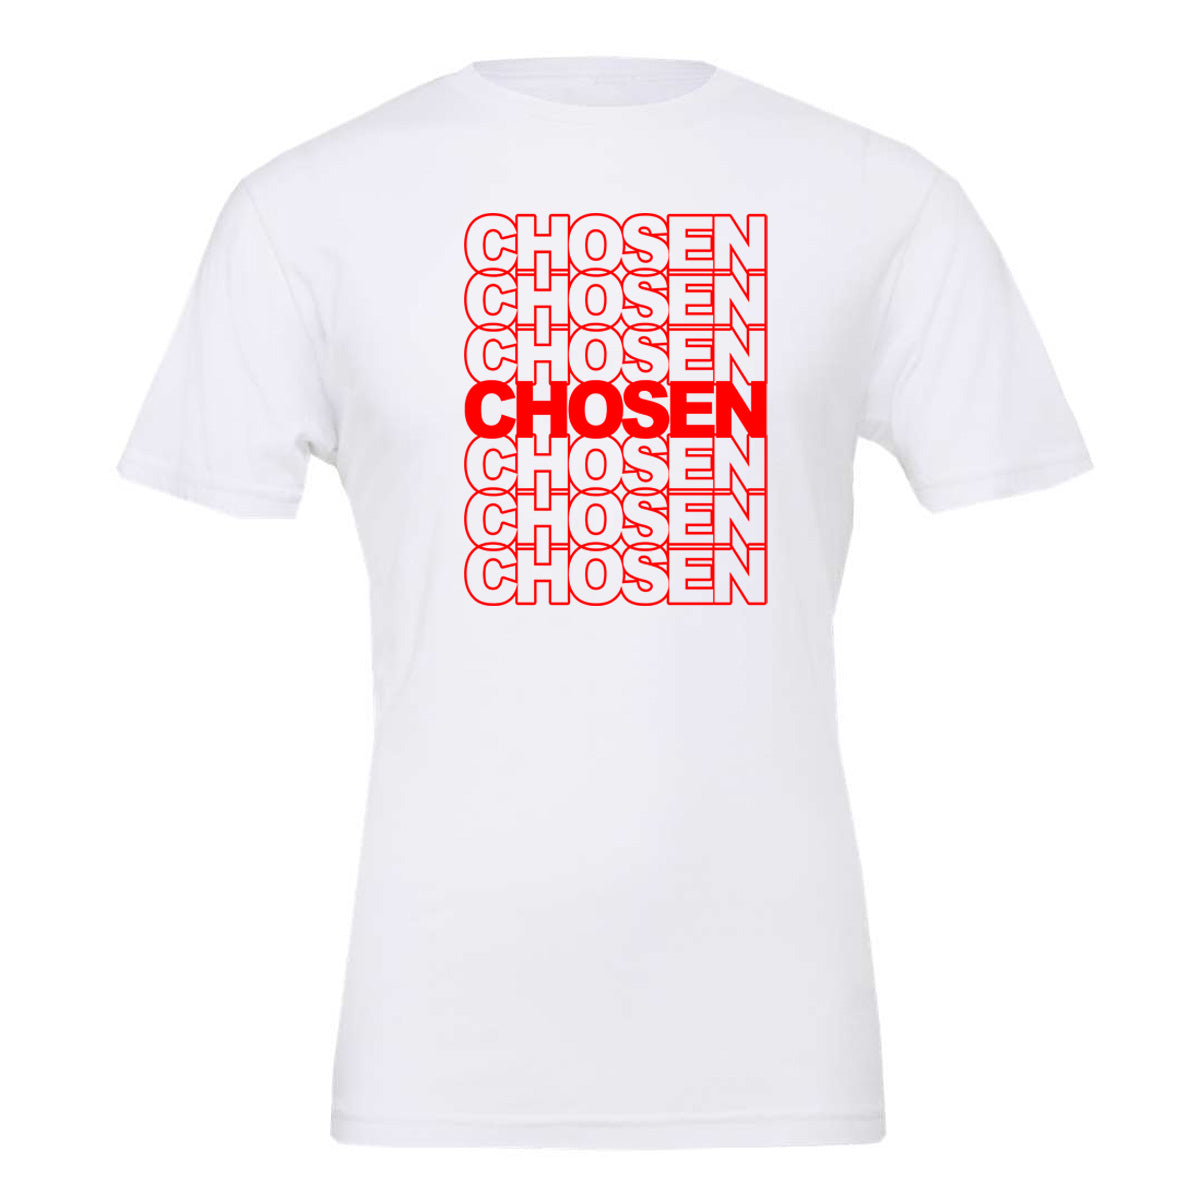 Chosen Chosen Chosen - White (Tee/Hoodie/Sweatshirt) - Southern Grace Creations